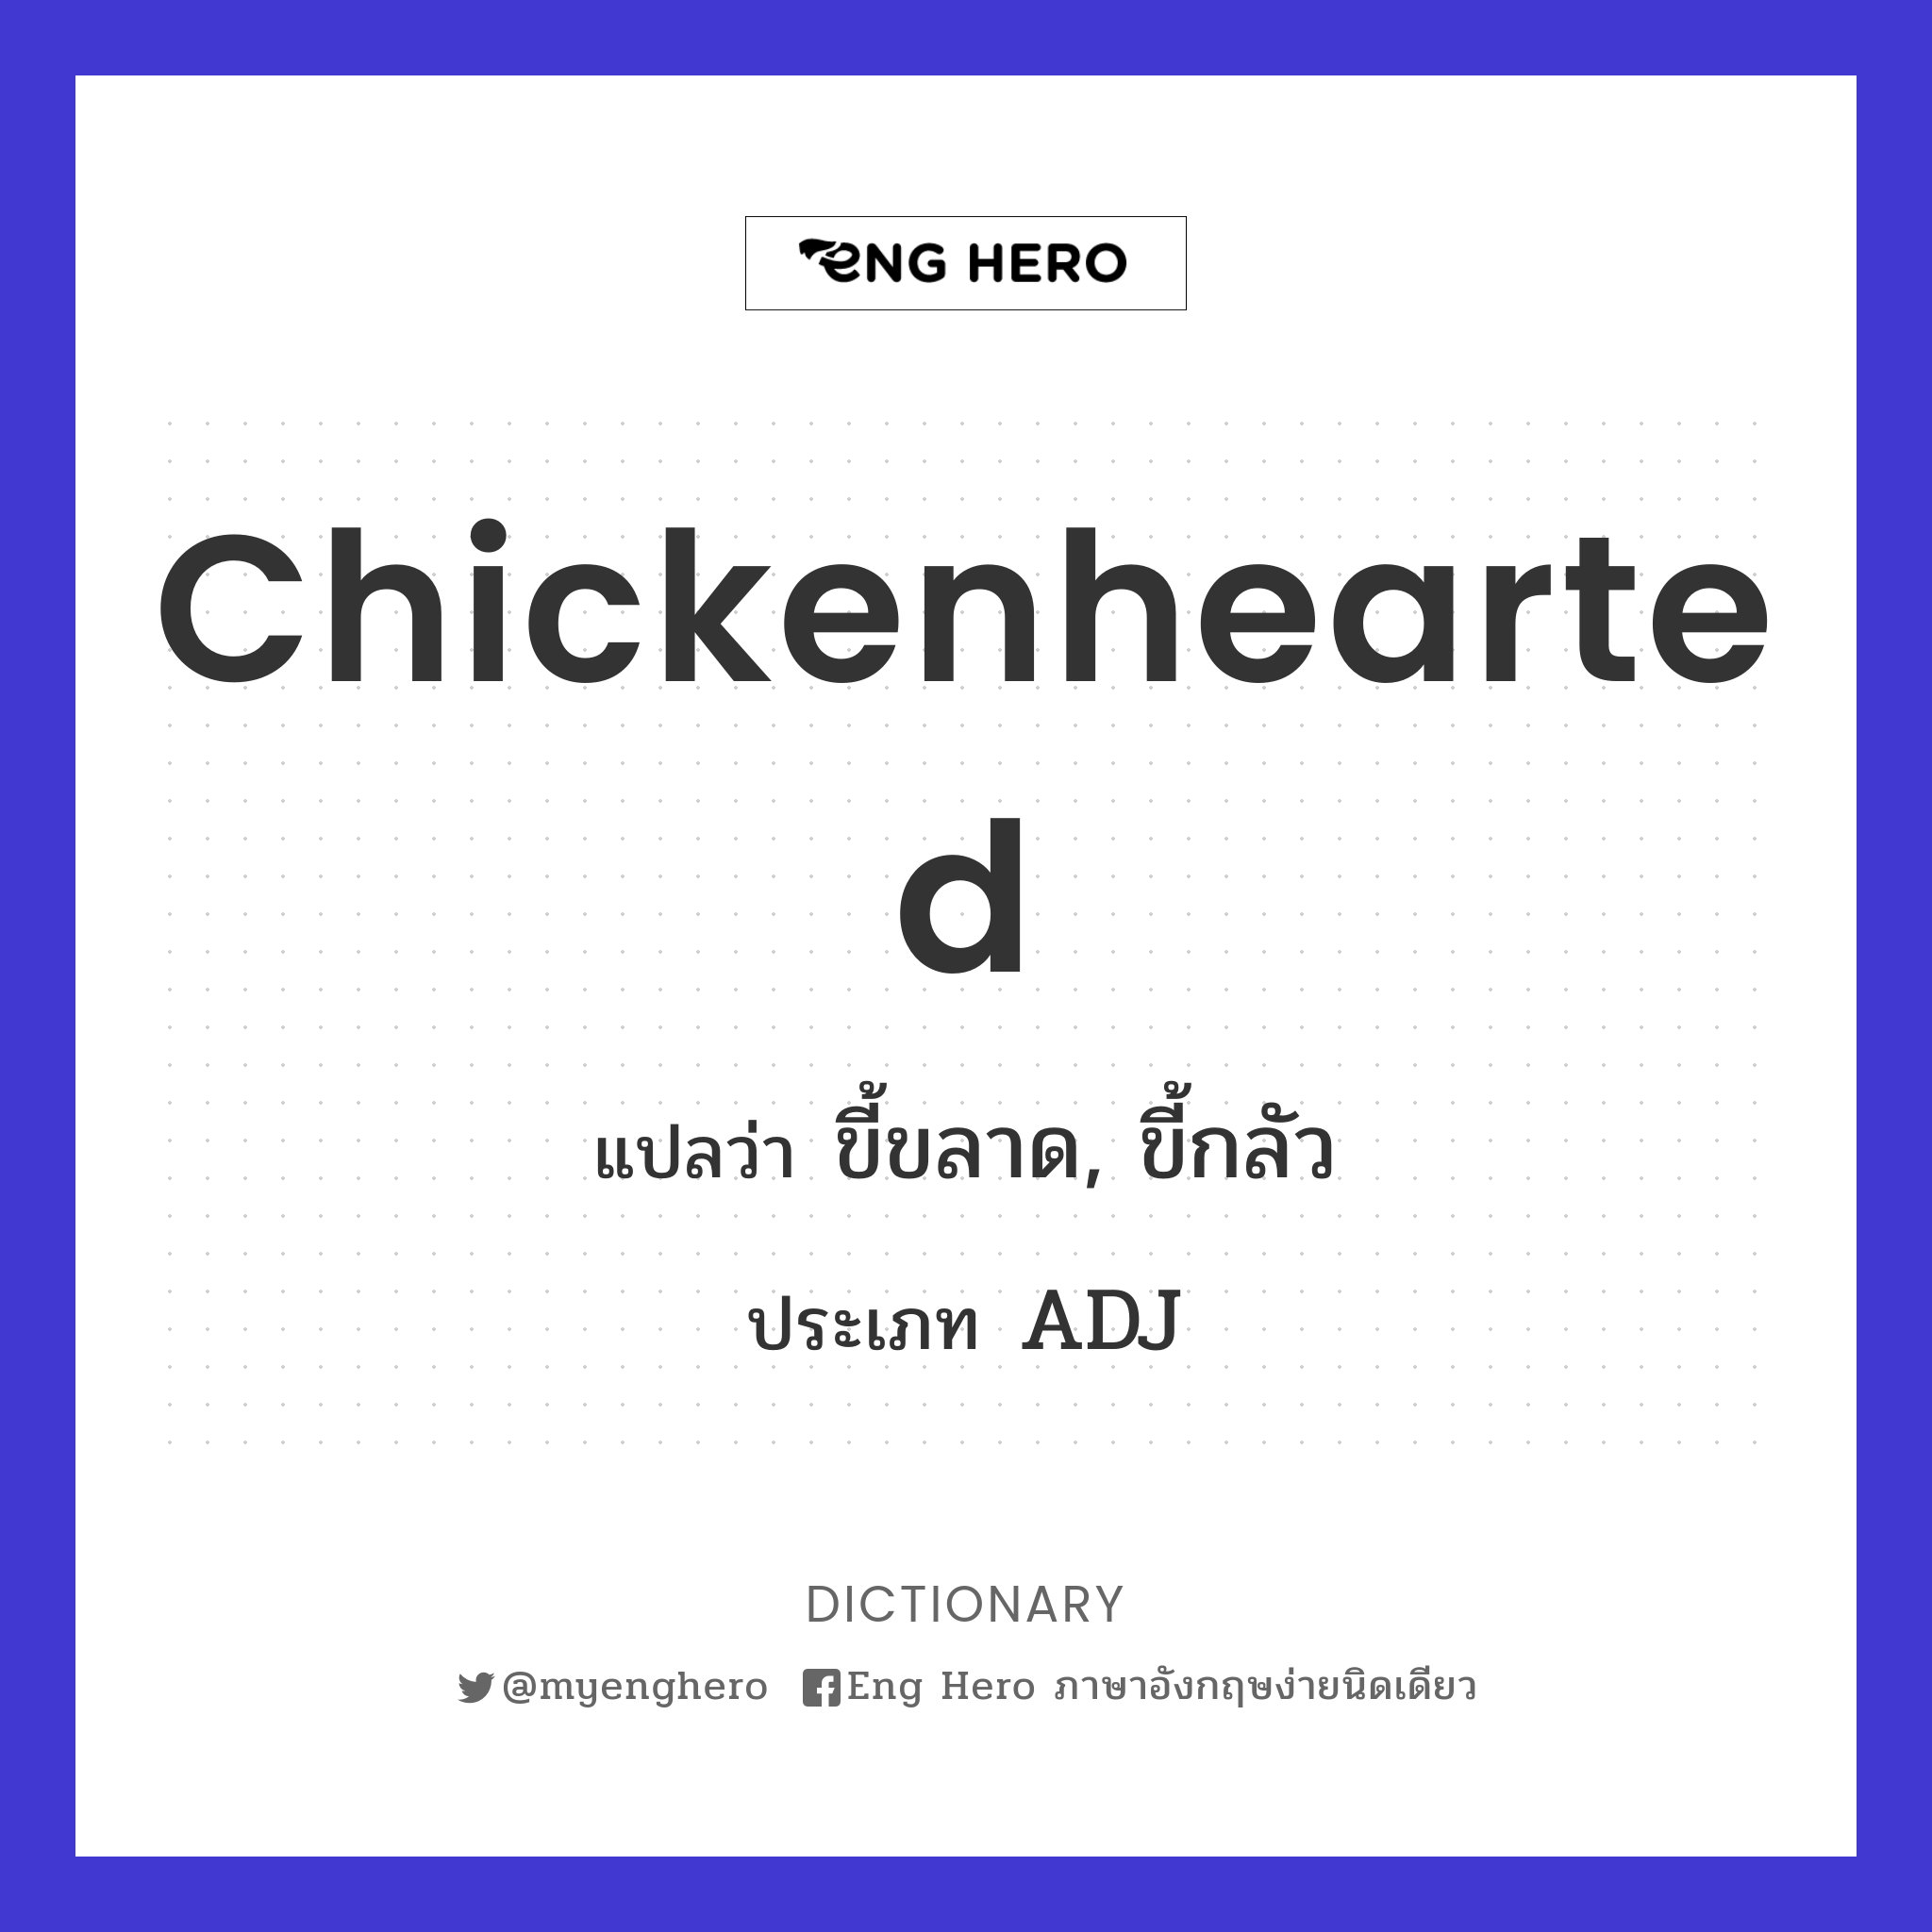 chickenhearted